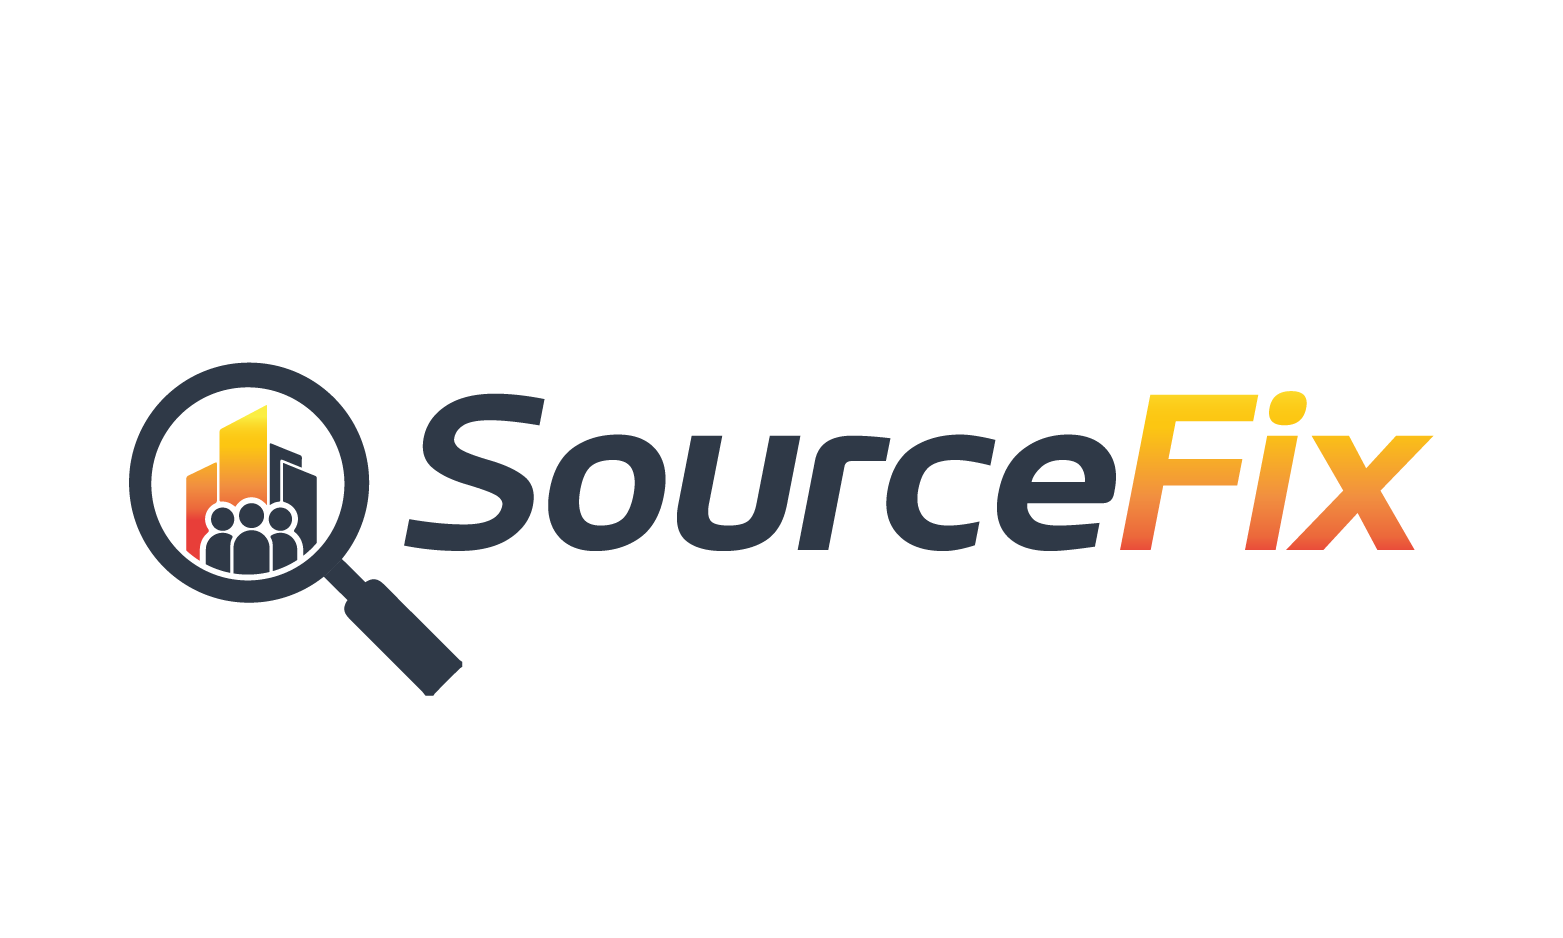 SourceFix.com - Creative brandable domain for sale